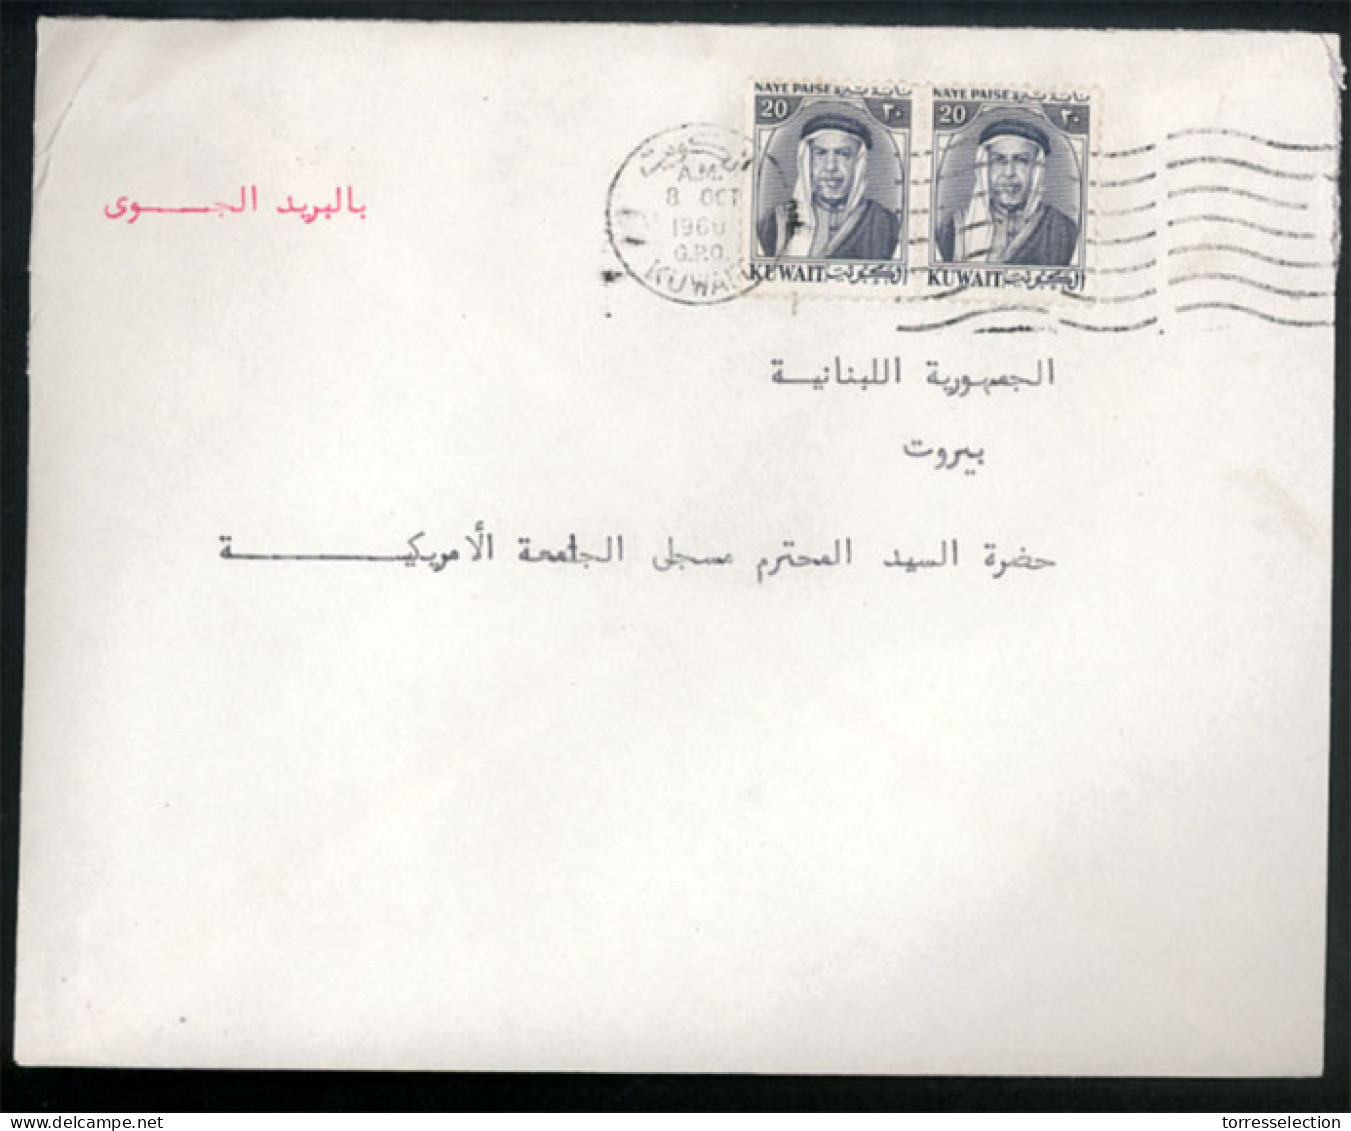 KUWAIT. 1960(8 Oct). KUWAIT-LEBANON. Kuwait To Beyrouth. Franked Envelope. Unusual Destination Seldom Seen. - Koweït